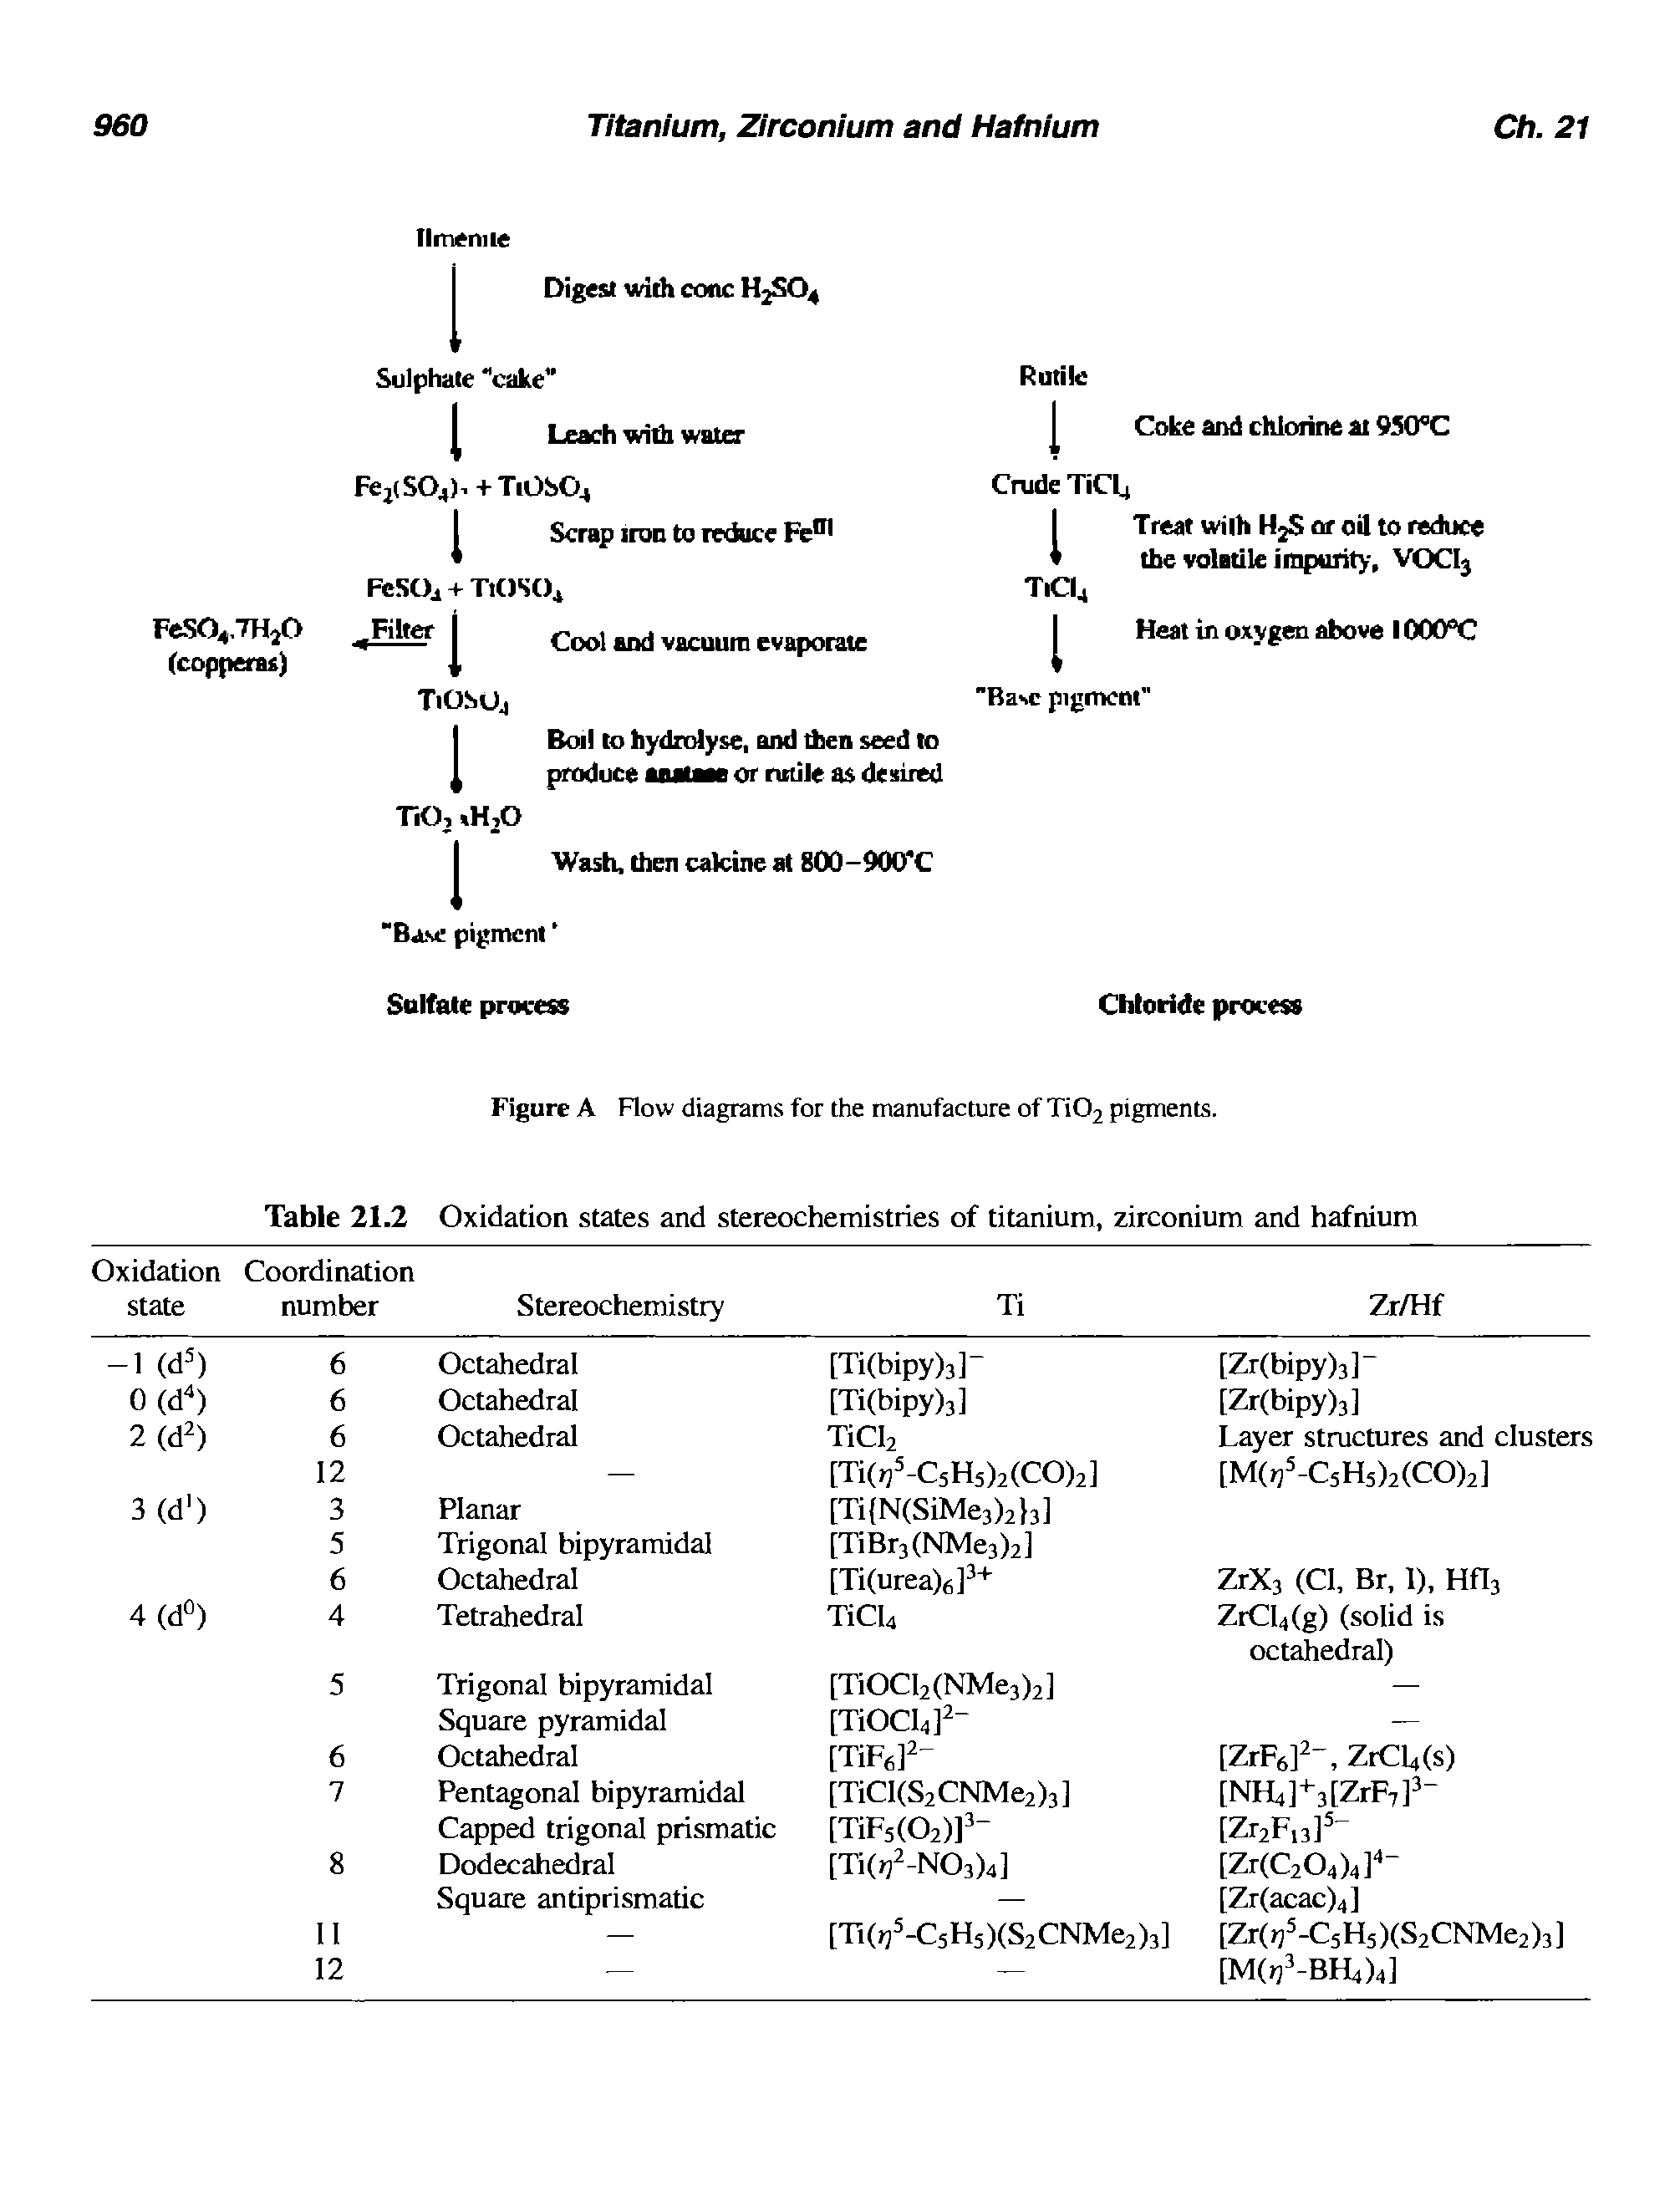 Table 21.2 Oxidation states and stereochemistries of titanium, zirconium and hafnium...